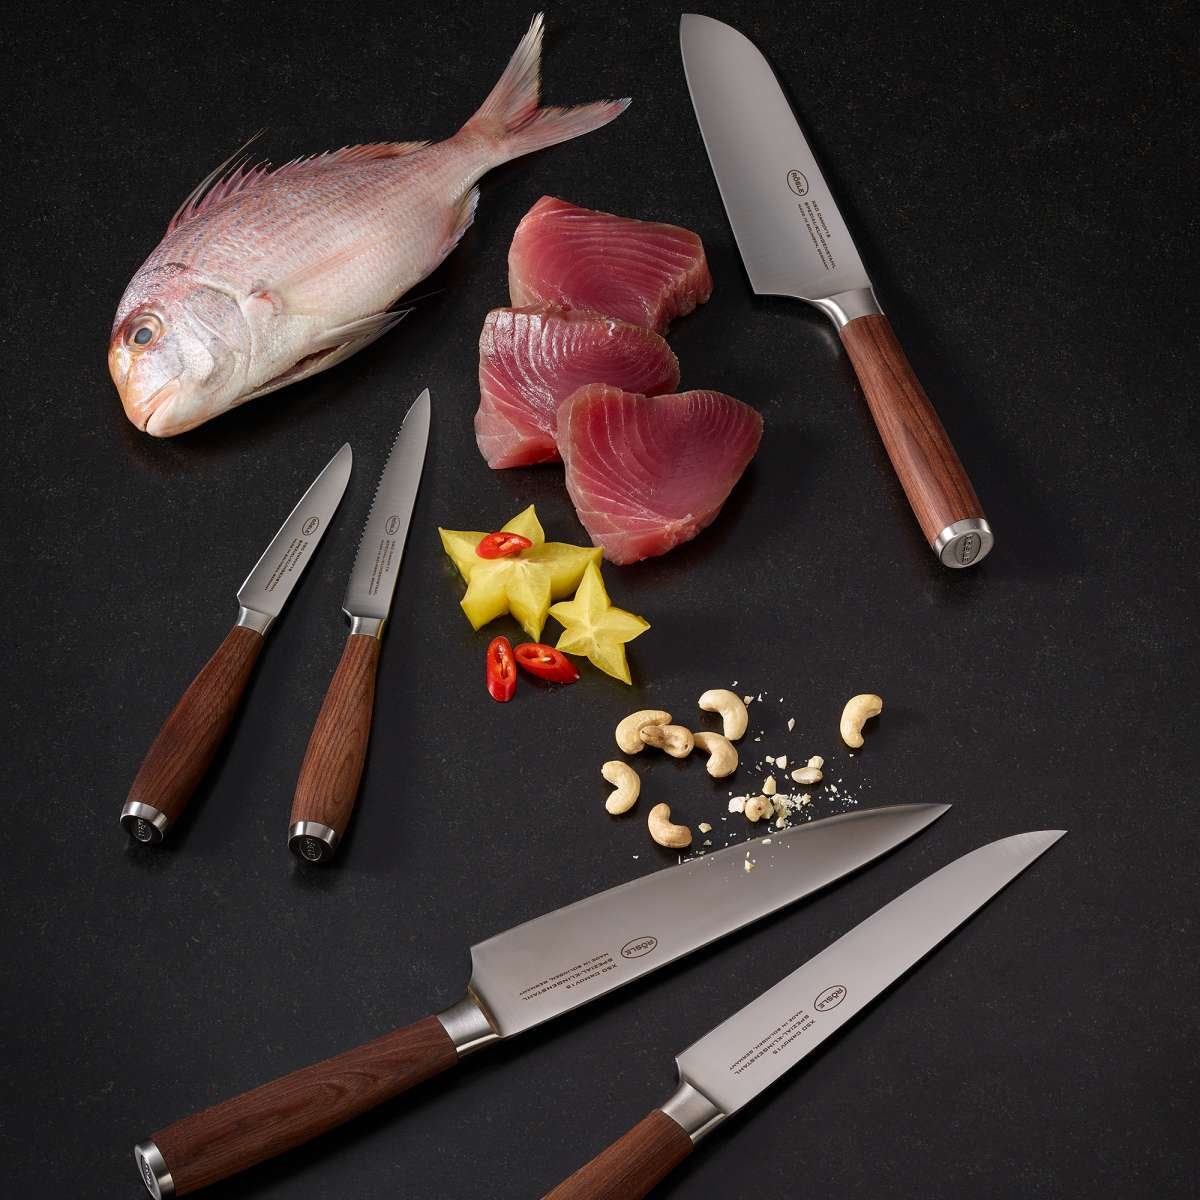 Rösle - Masterclass 20cm (8") Chef's Knife